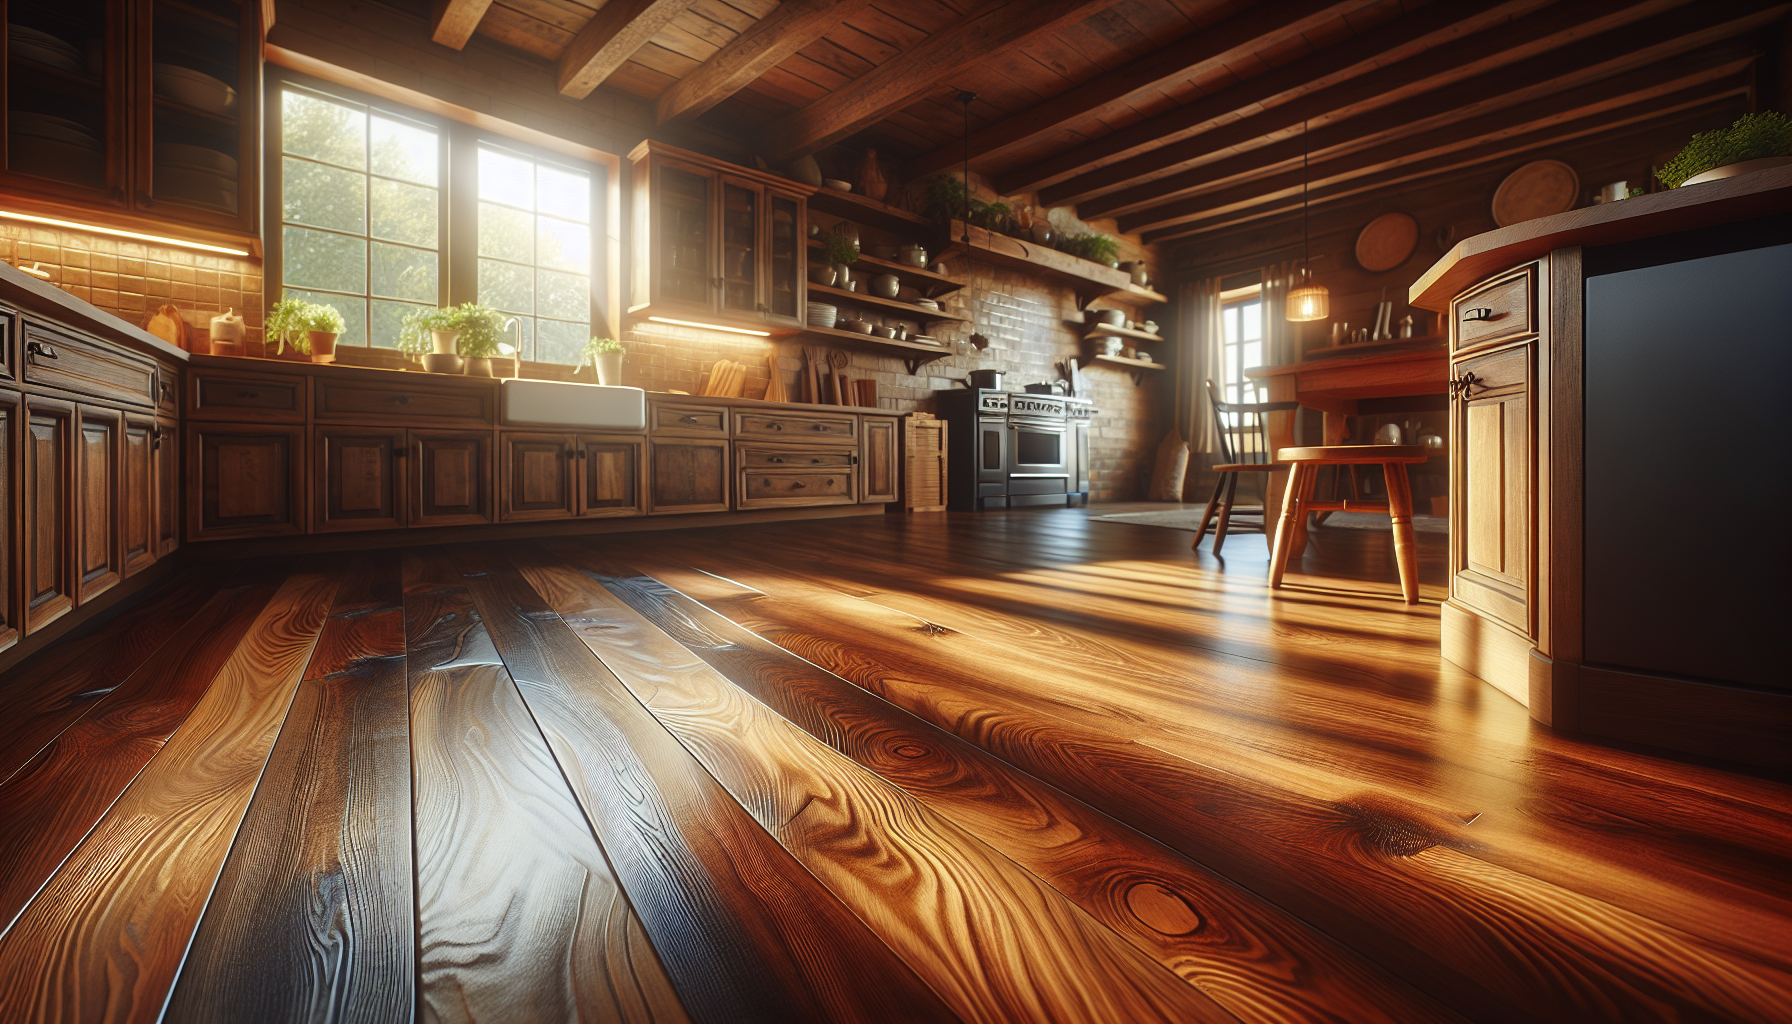 Beautiful hardwood flooring in a renovated kitchen